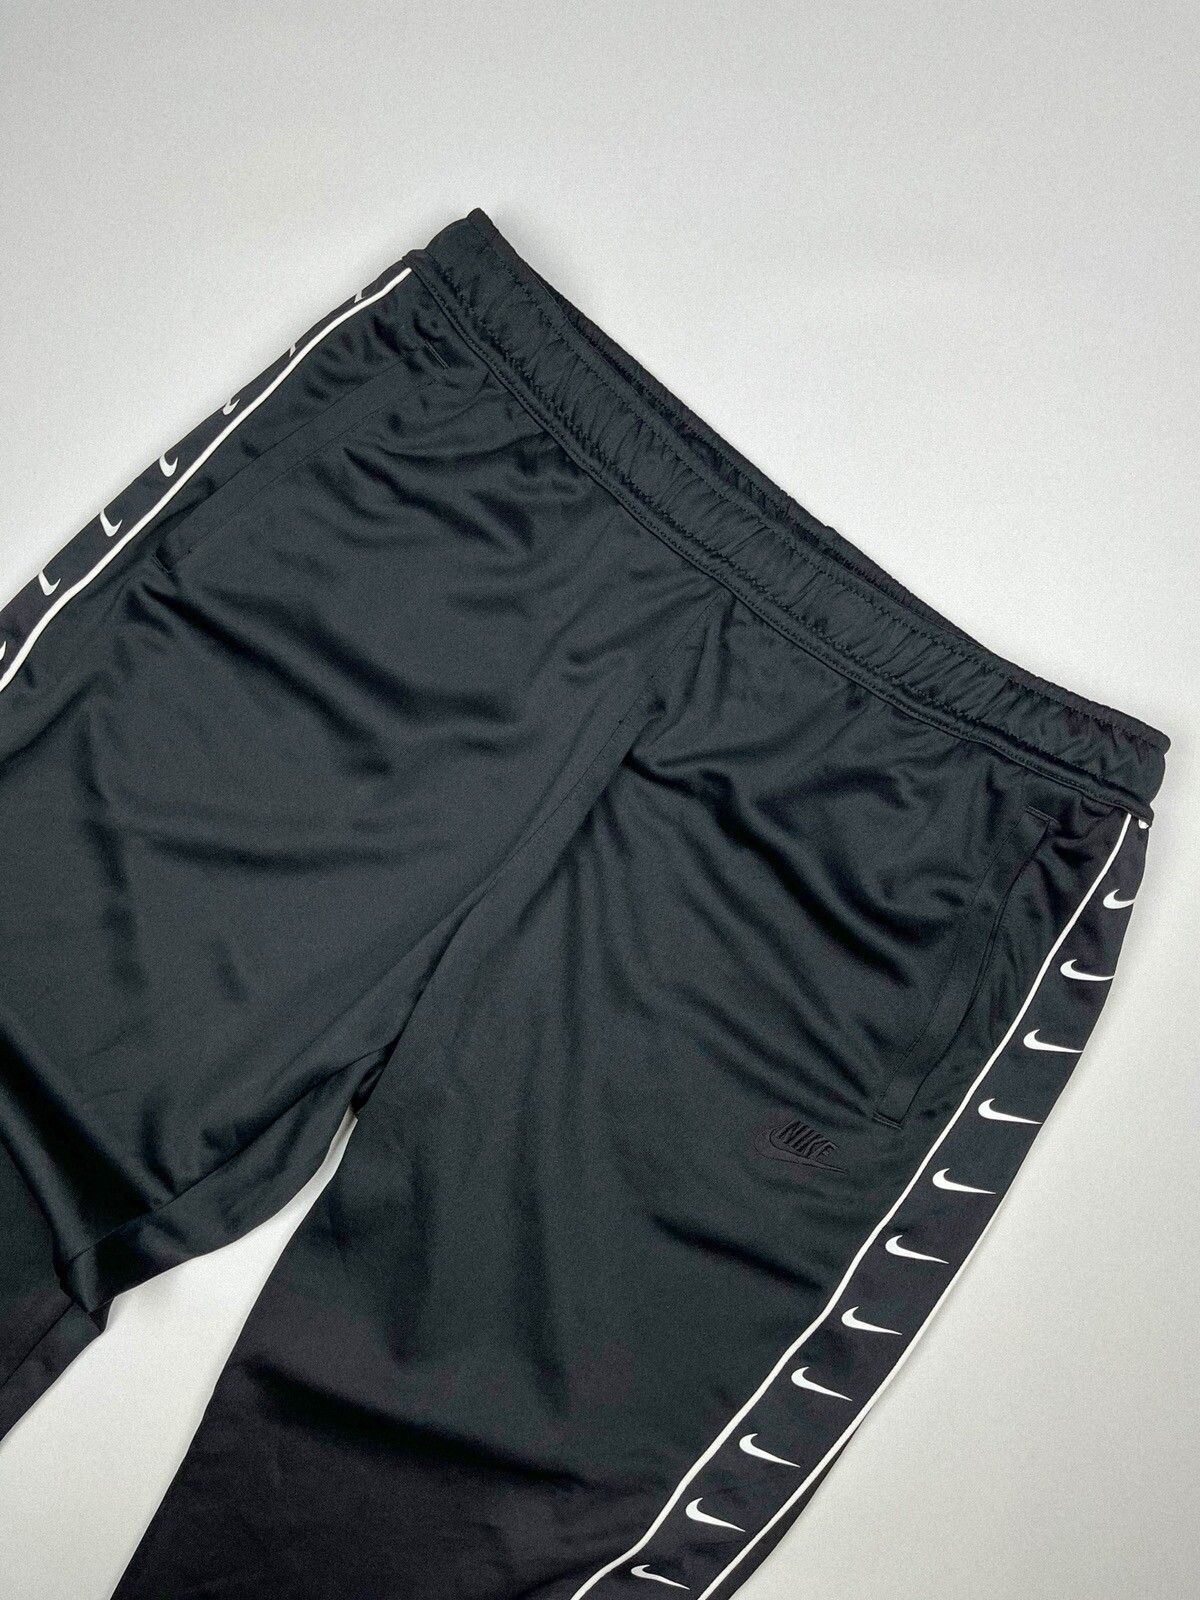 Nike Nike Trackpants Full Side Snap Pants 3XL Size US 40 / EU 56 - 2 Preview